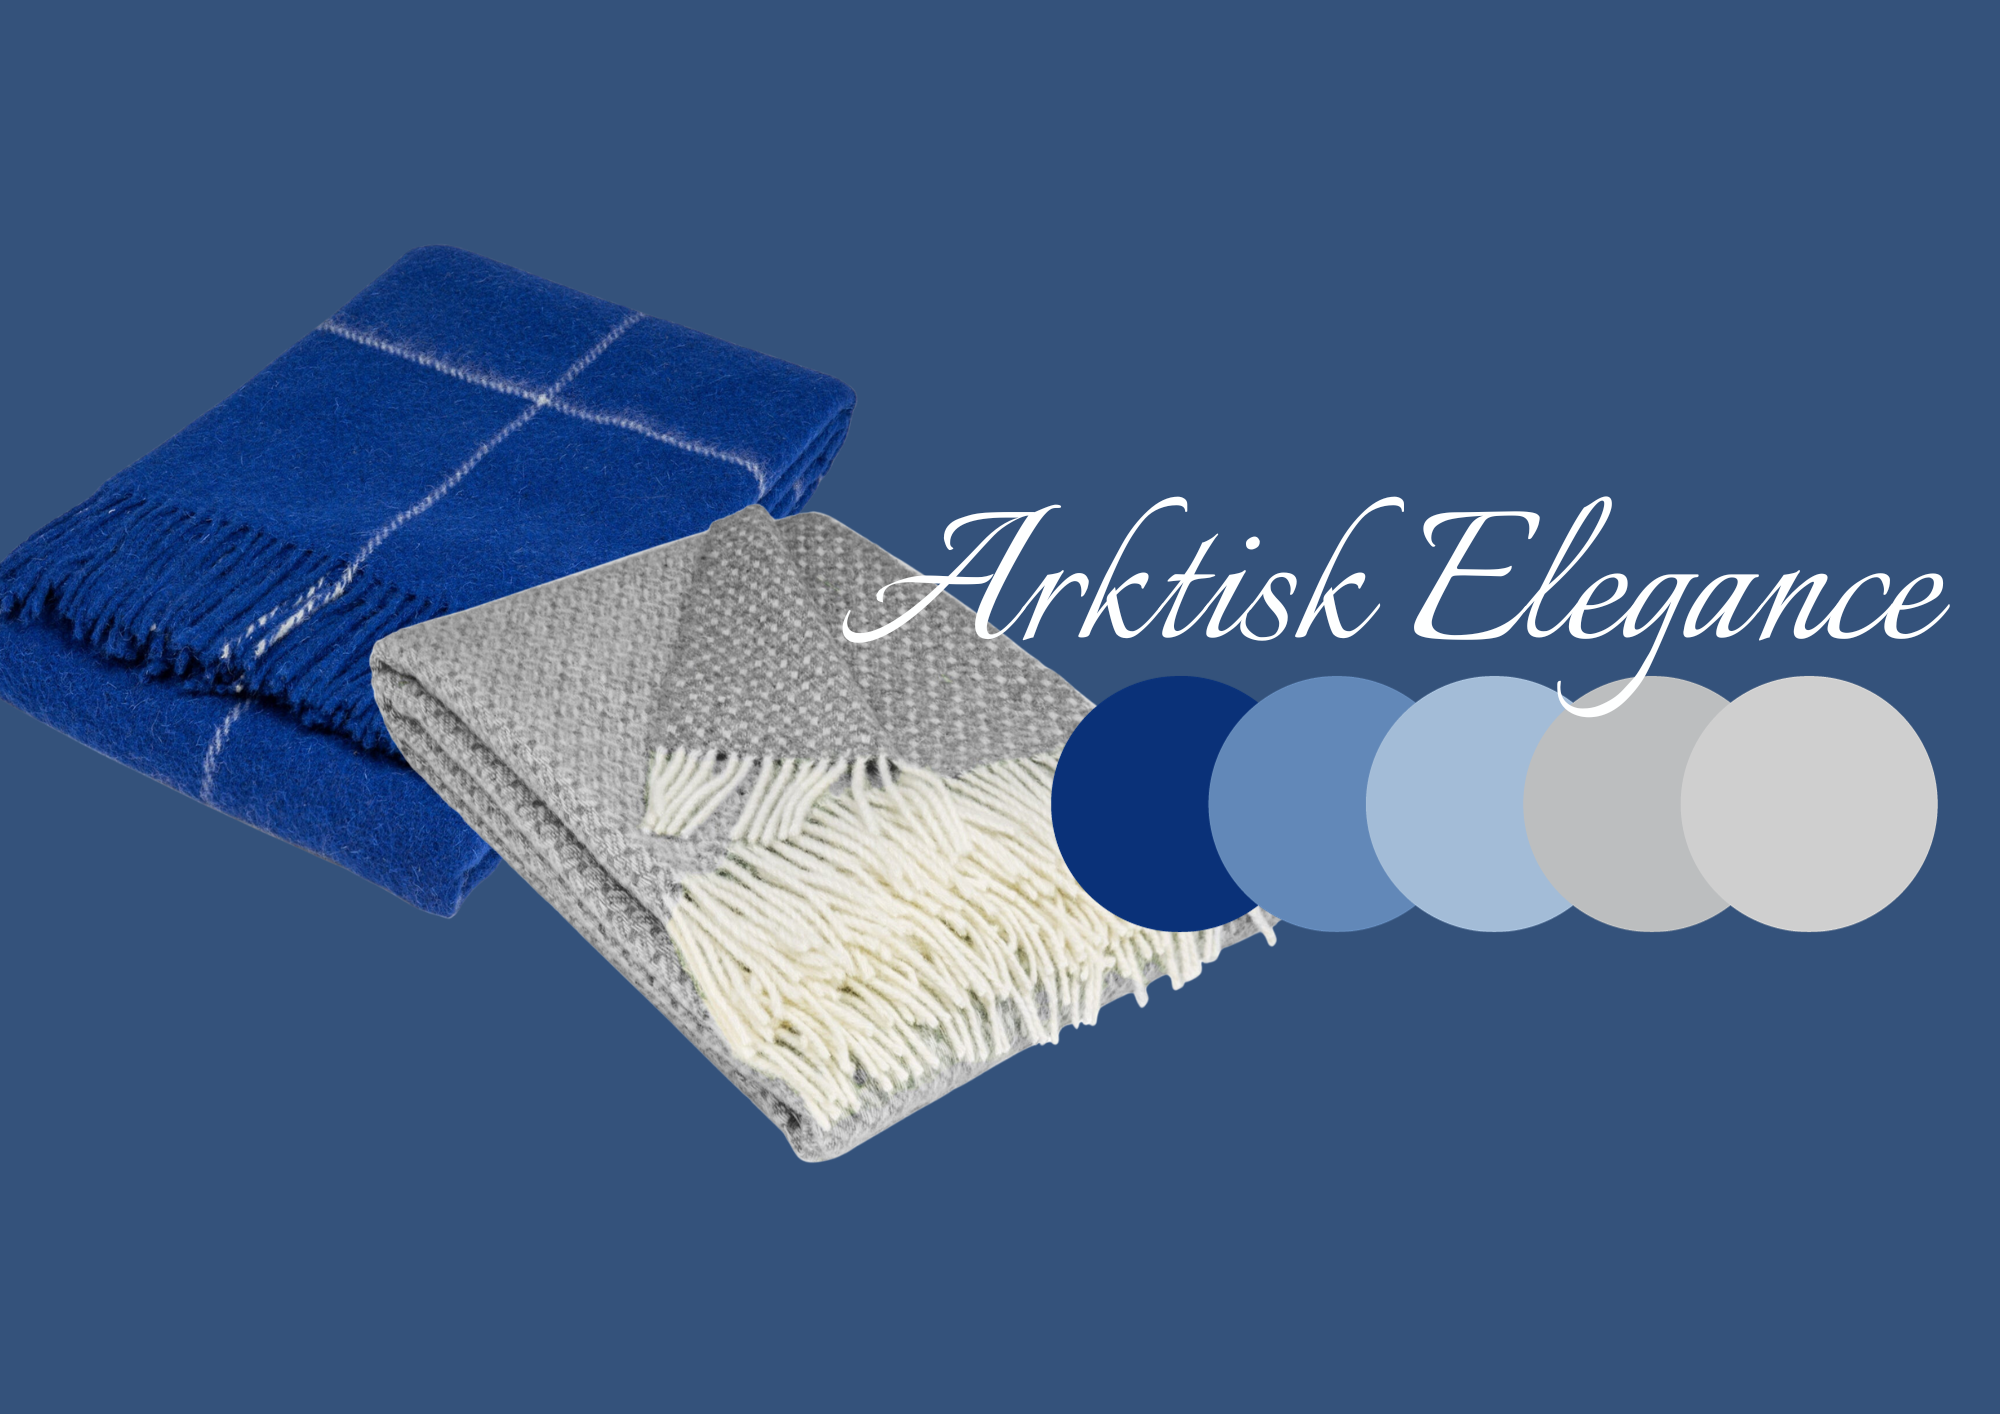 farvekort med blå og grå toner sammen med to uldplaider og teksten 'arktisk elegance'